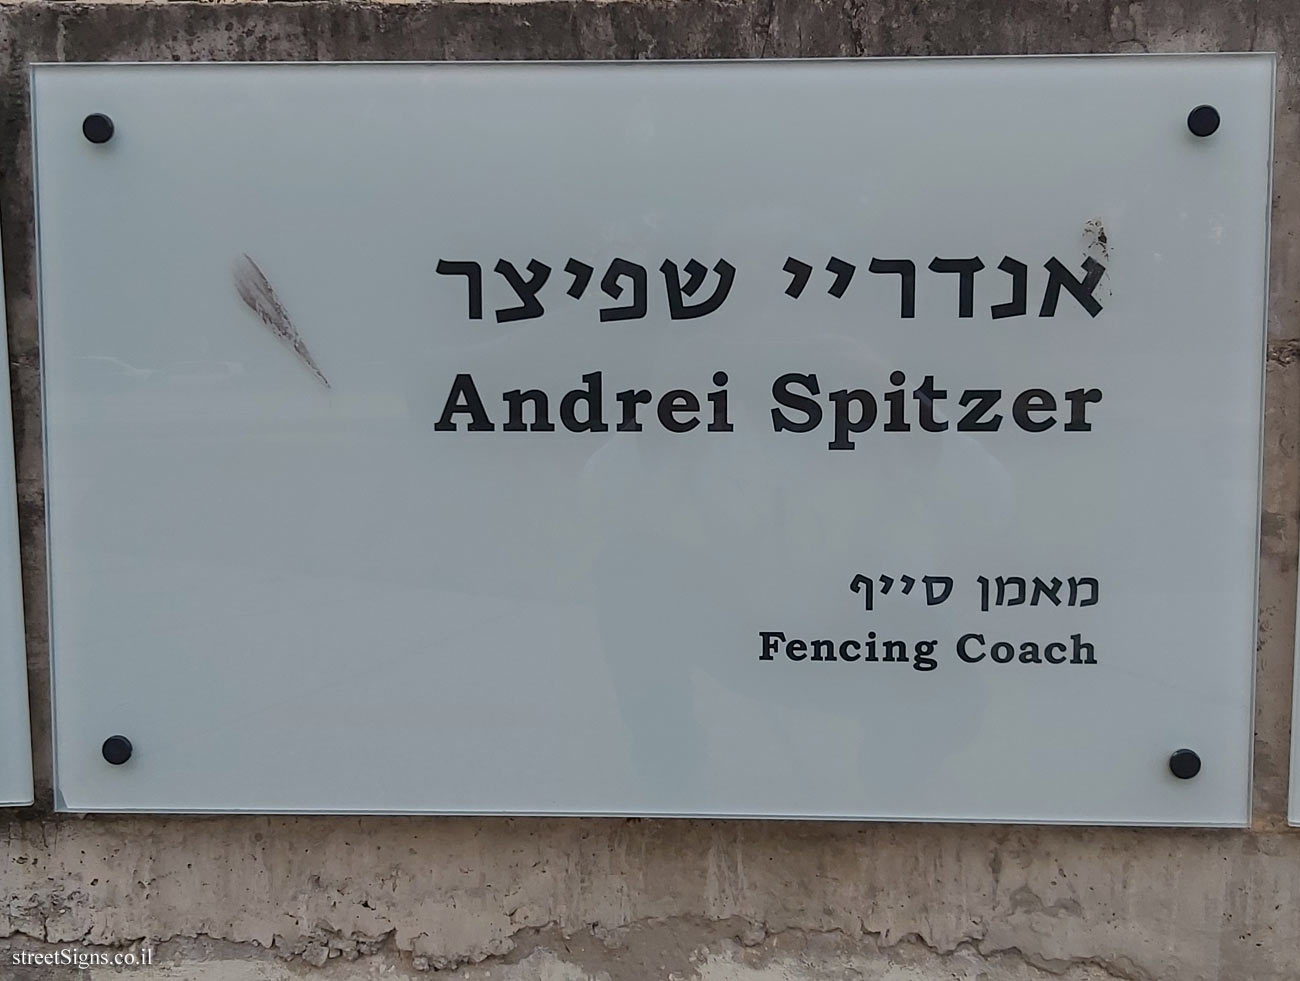 Tel Aviv - The eleventh square - Andrei Spitzer